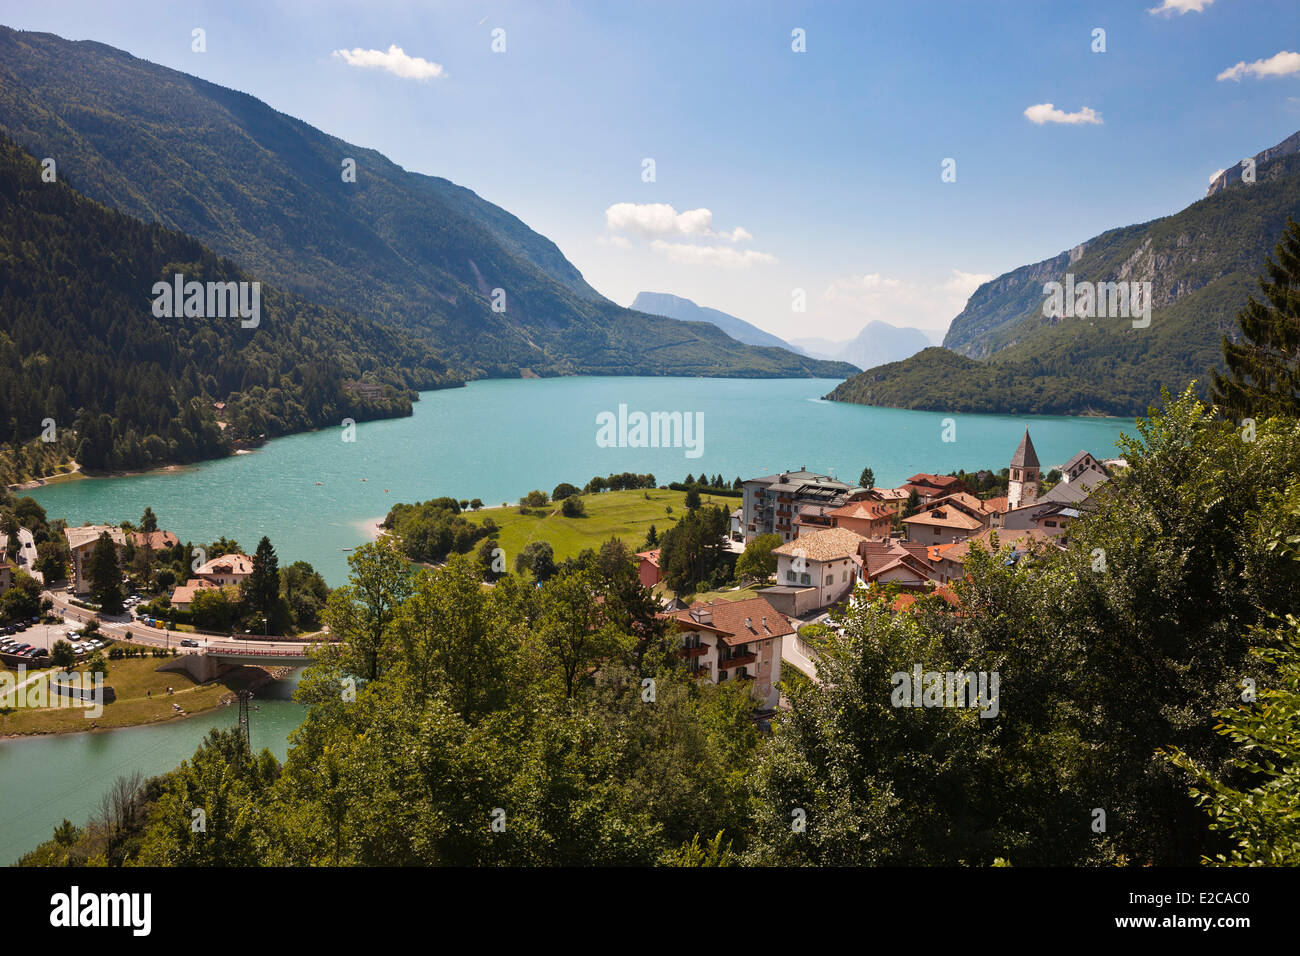 Italy, Trentino Alto Adige, Dolomites, Brenta group, Lake Molveno Stock Photo